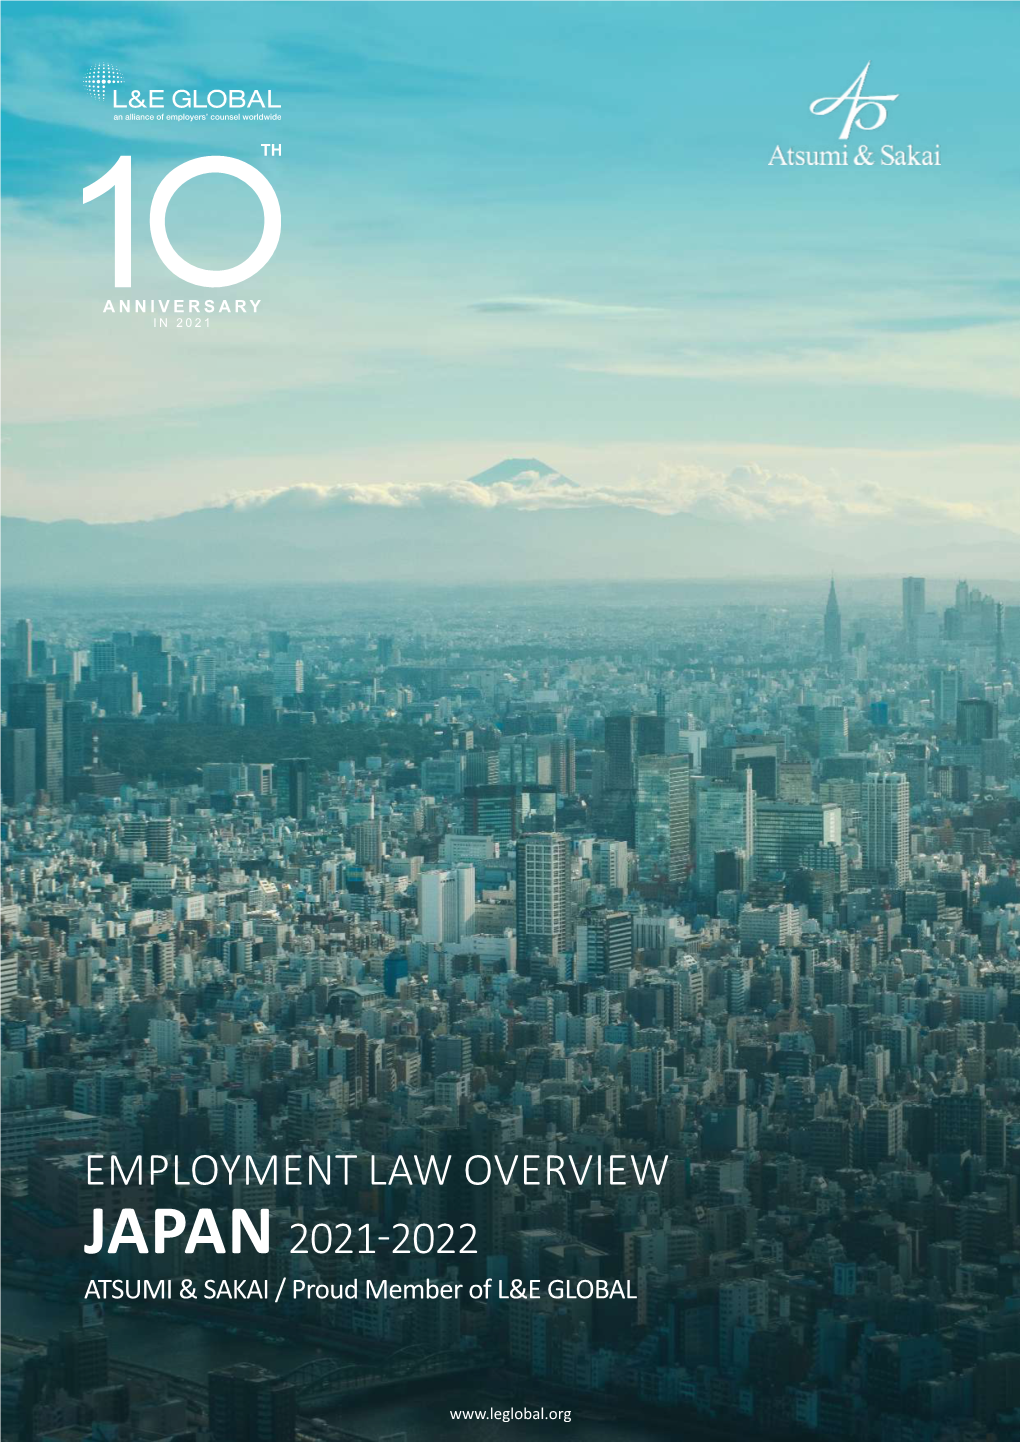 Employment Law Overview Japan 2021-2022 ATSUMI & SAKAI / Proud Member of L&E GLOBAL